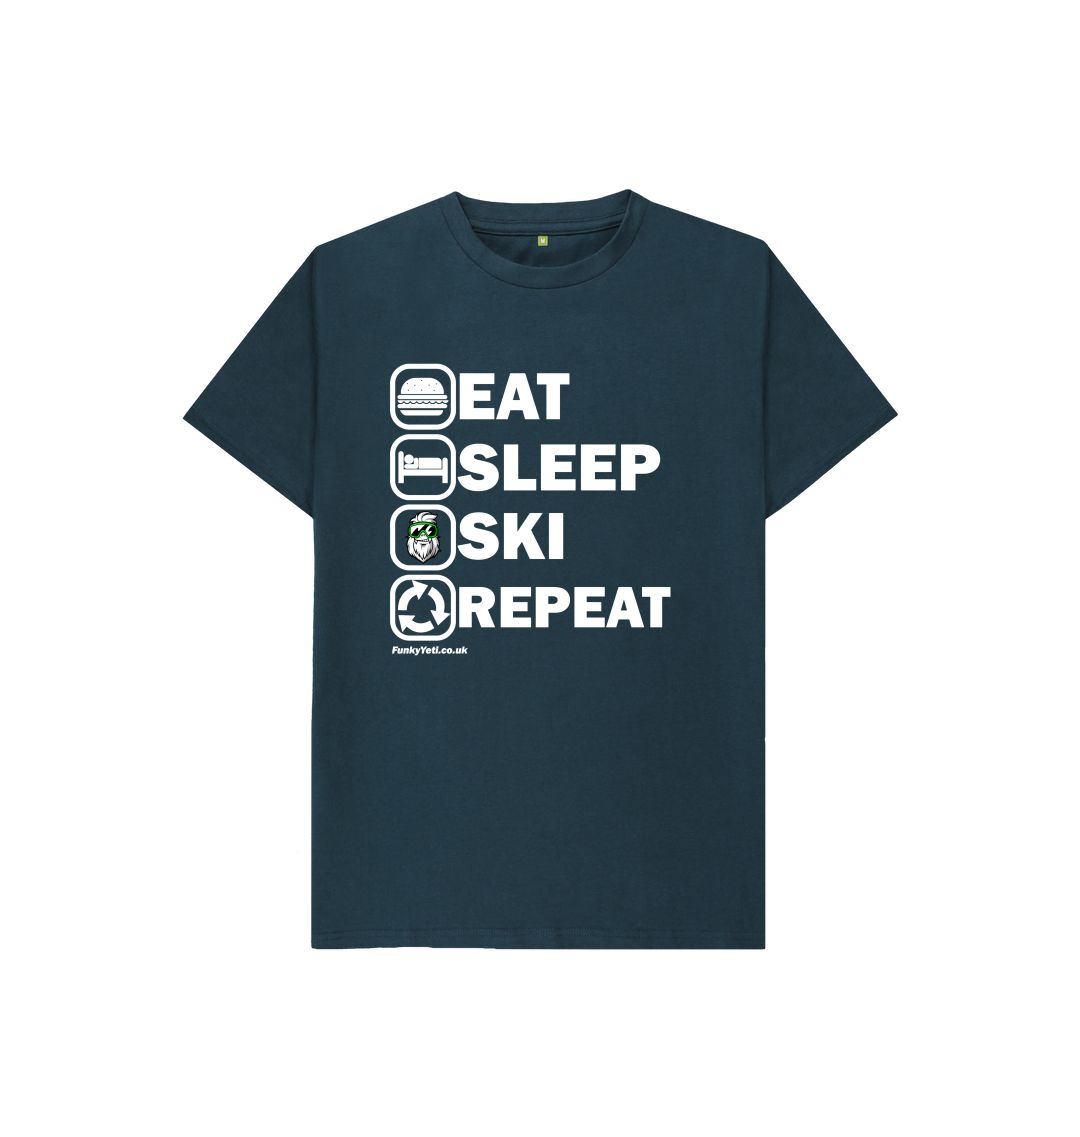 Denim Blue Funky Yeti Kids Tee - Eat Sleep Ski Repeat